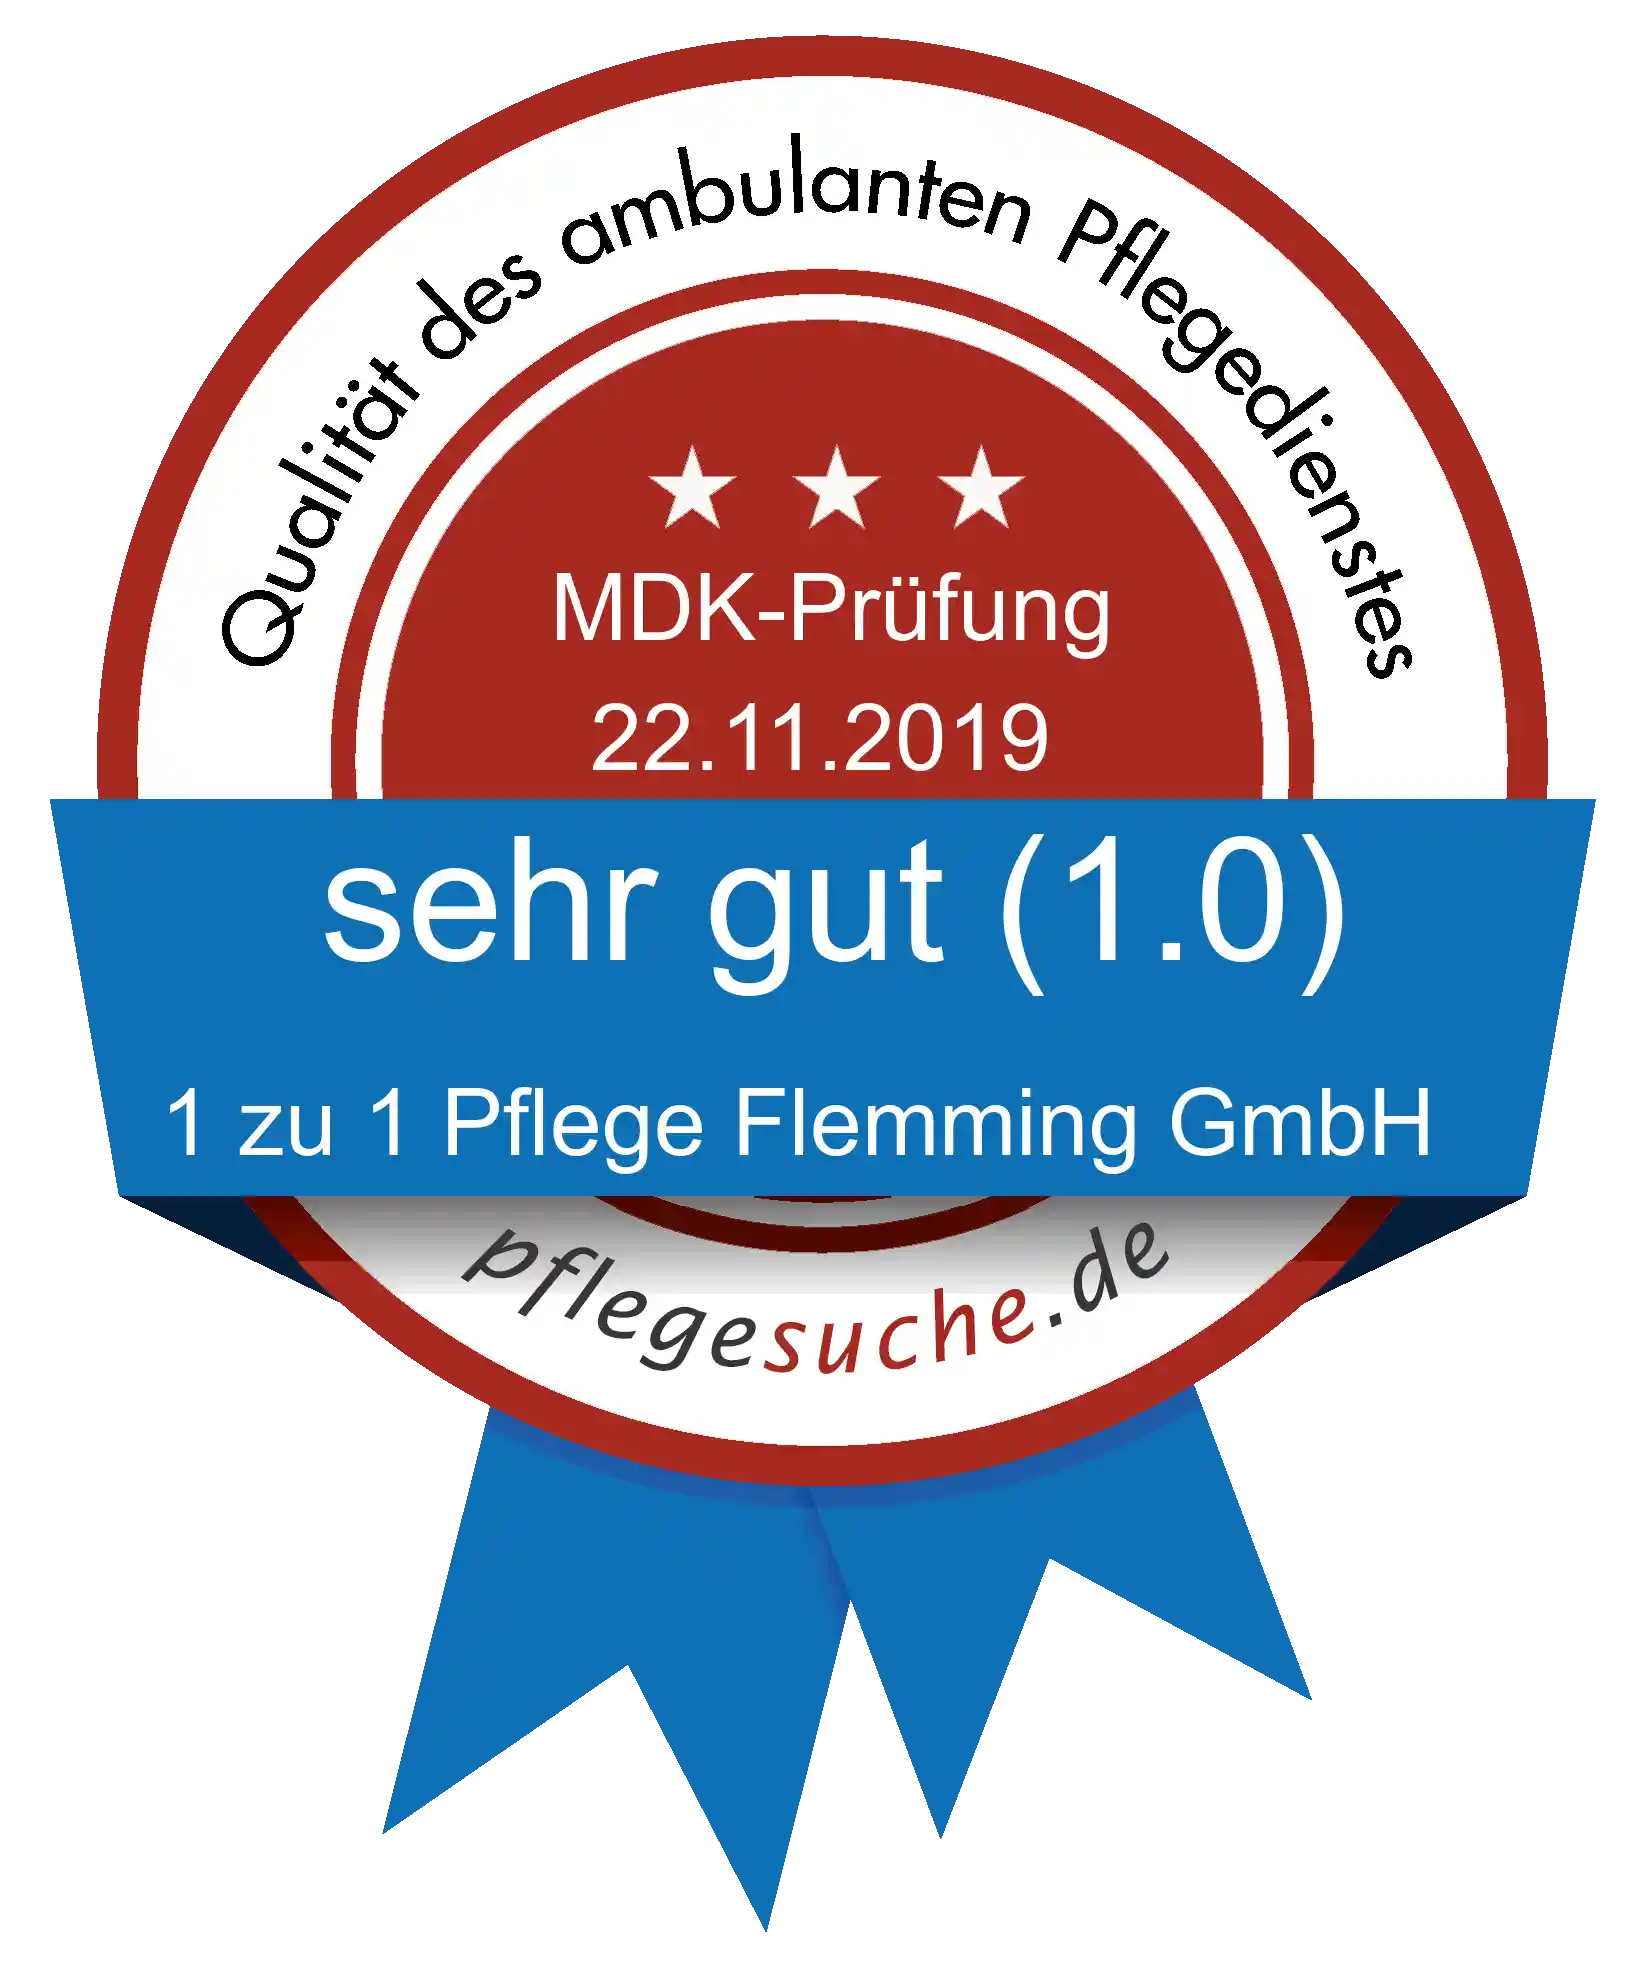 Siegel Benotung: 1 zu 1 Pflege Flemming GmbH